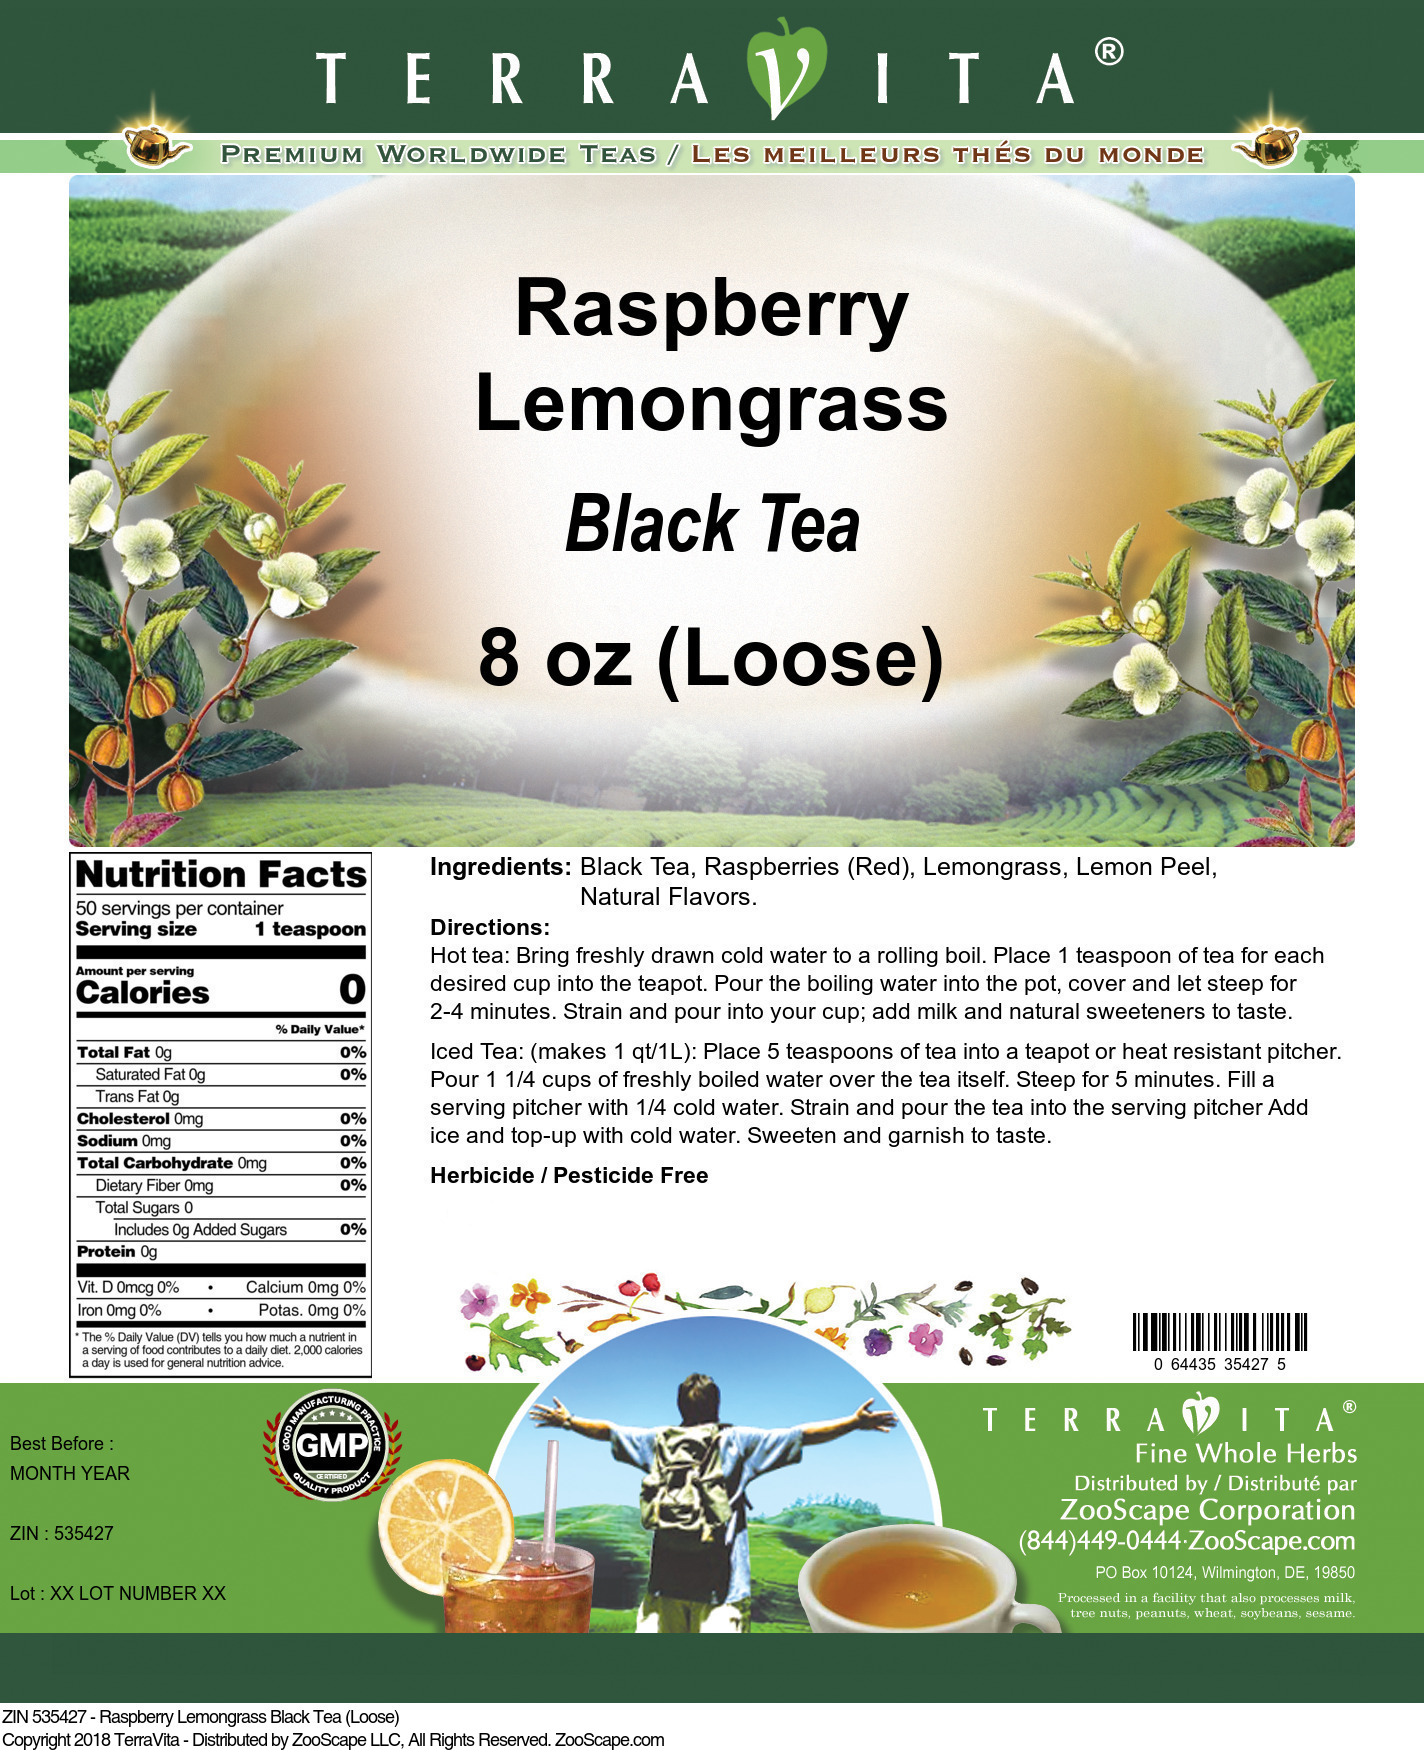 Raspberry Lemongrass Black Tea (Loose) - Label